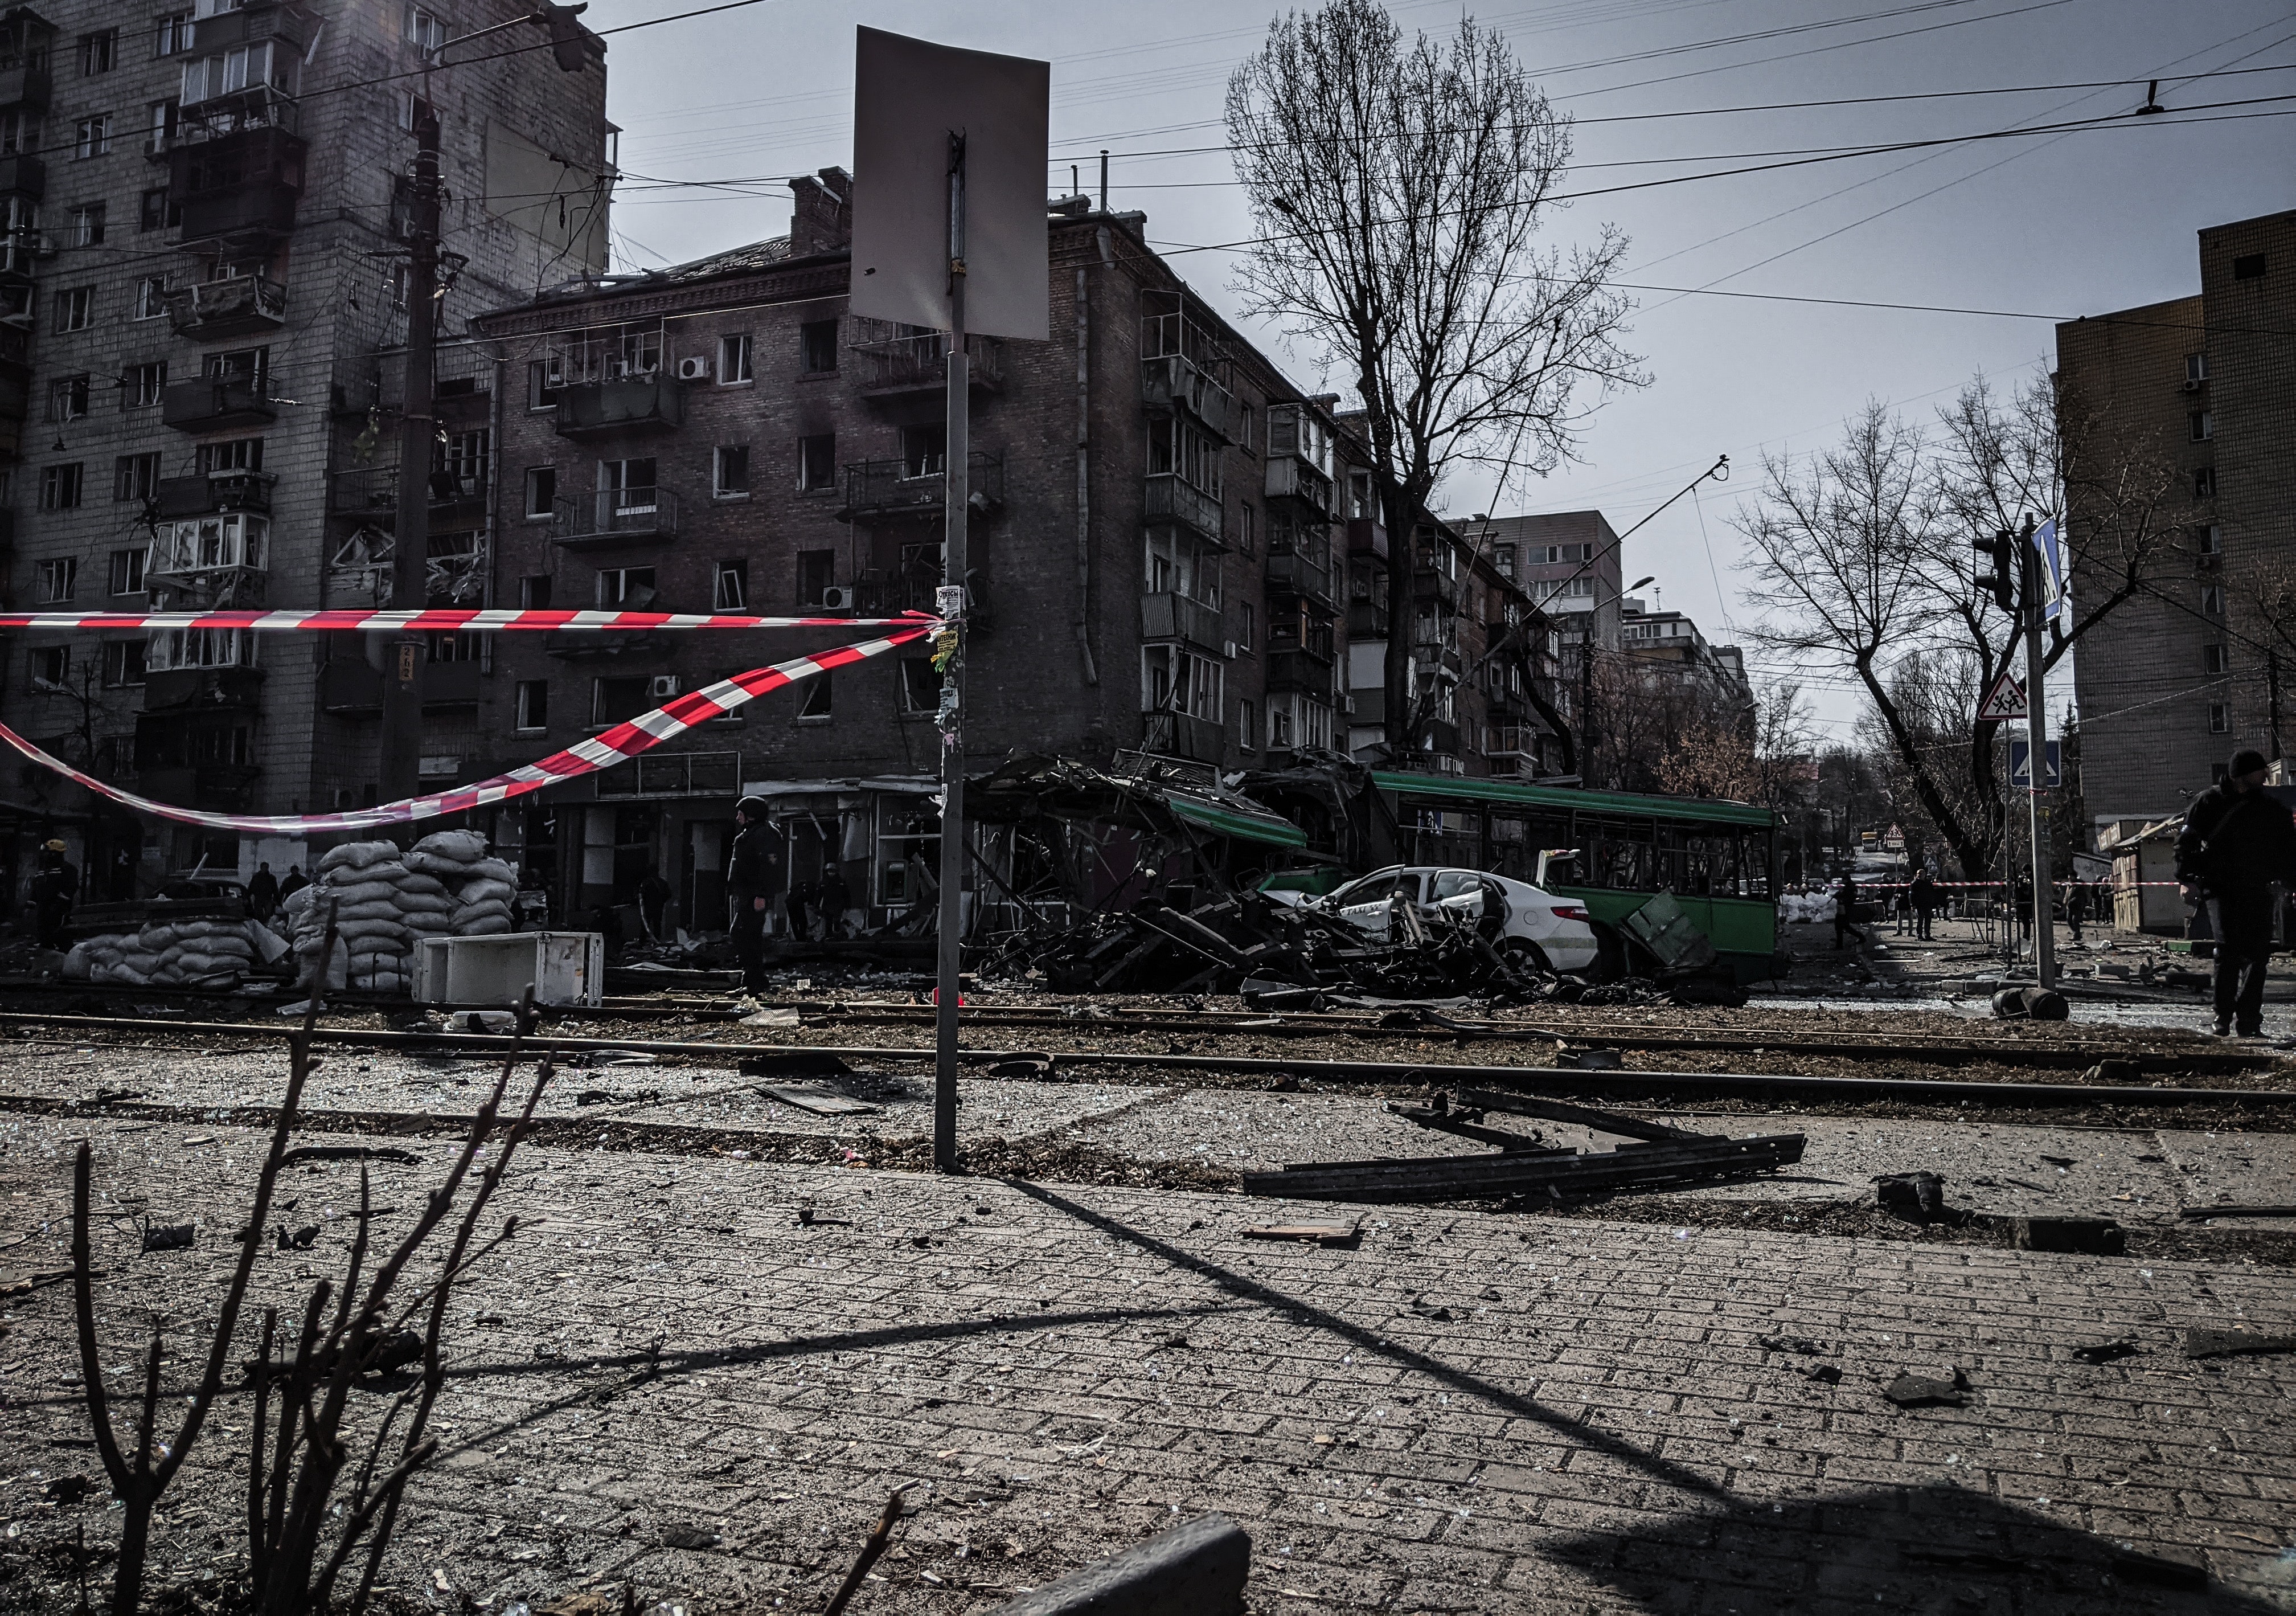 War destruction of a Ukrainian City Image by Алесь Усцінаў